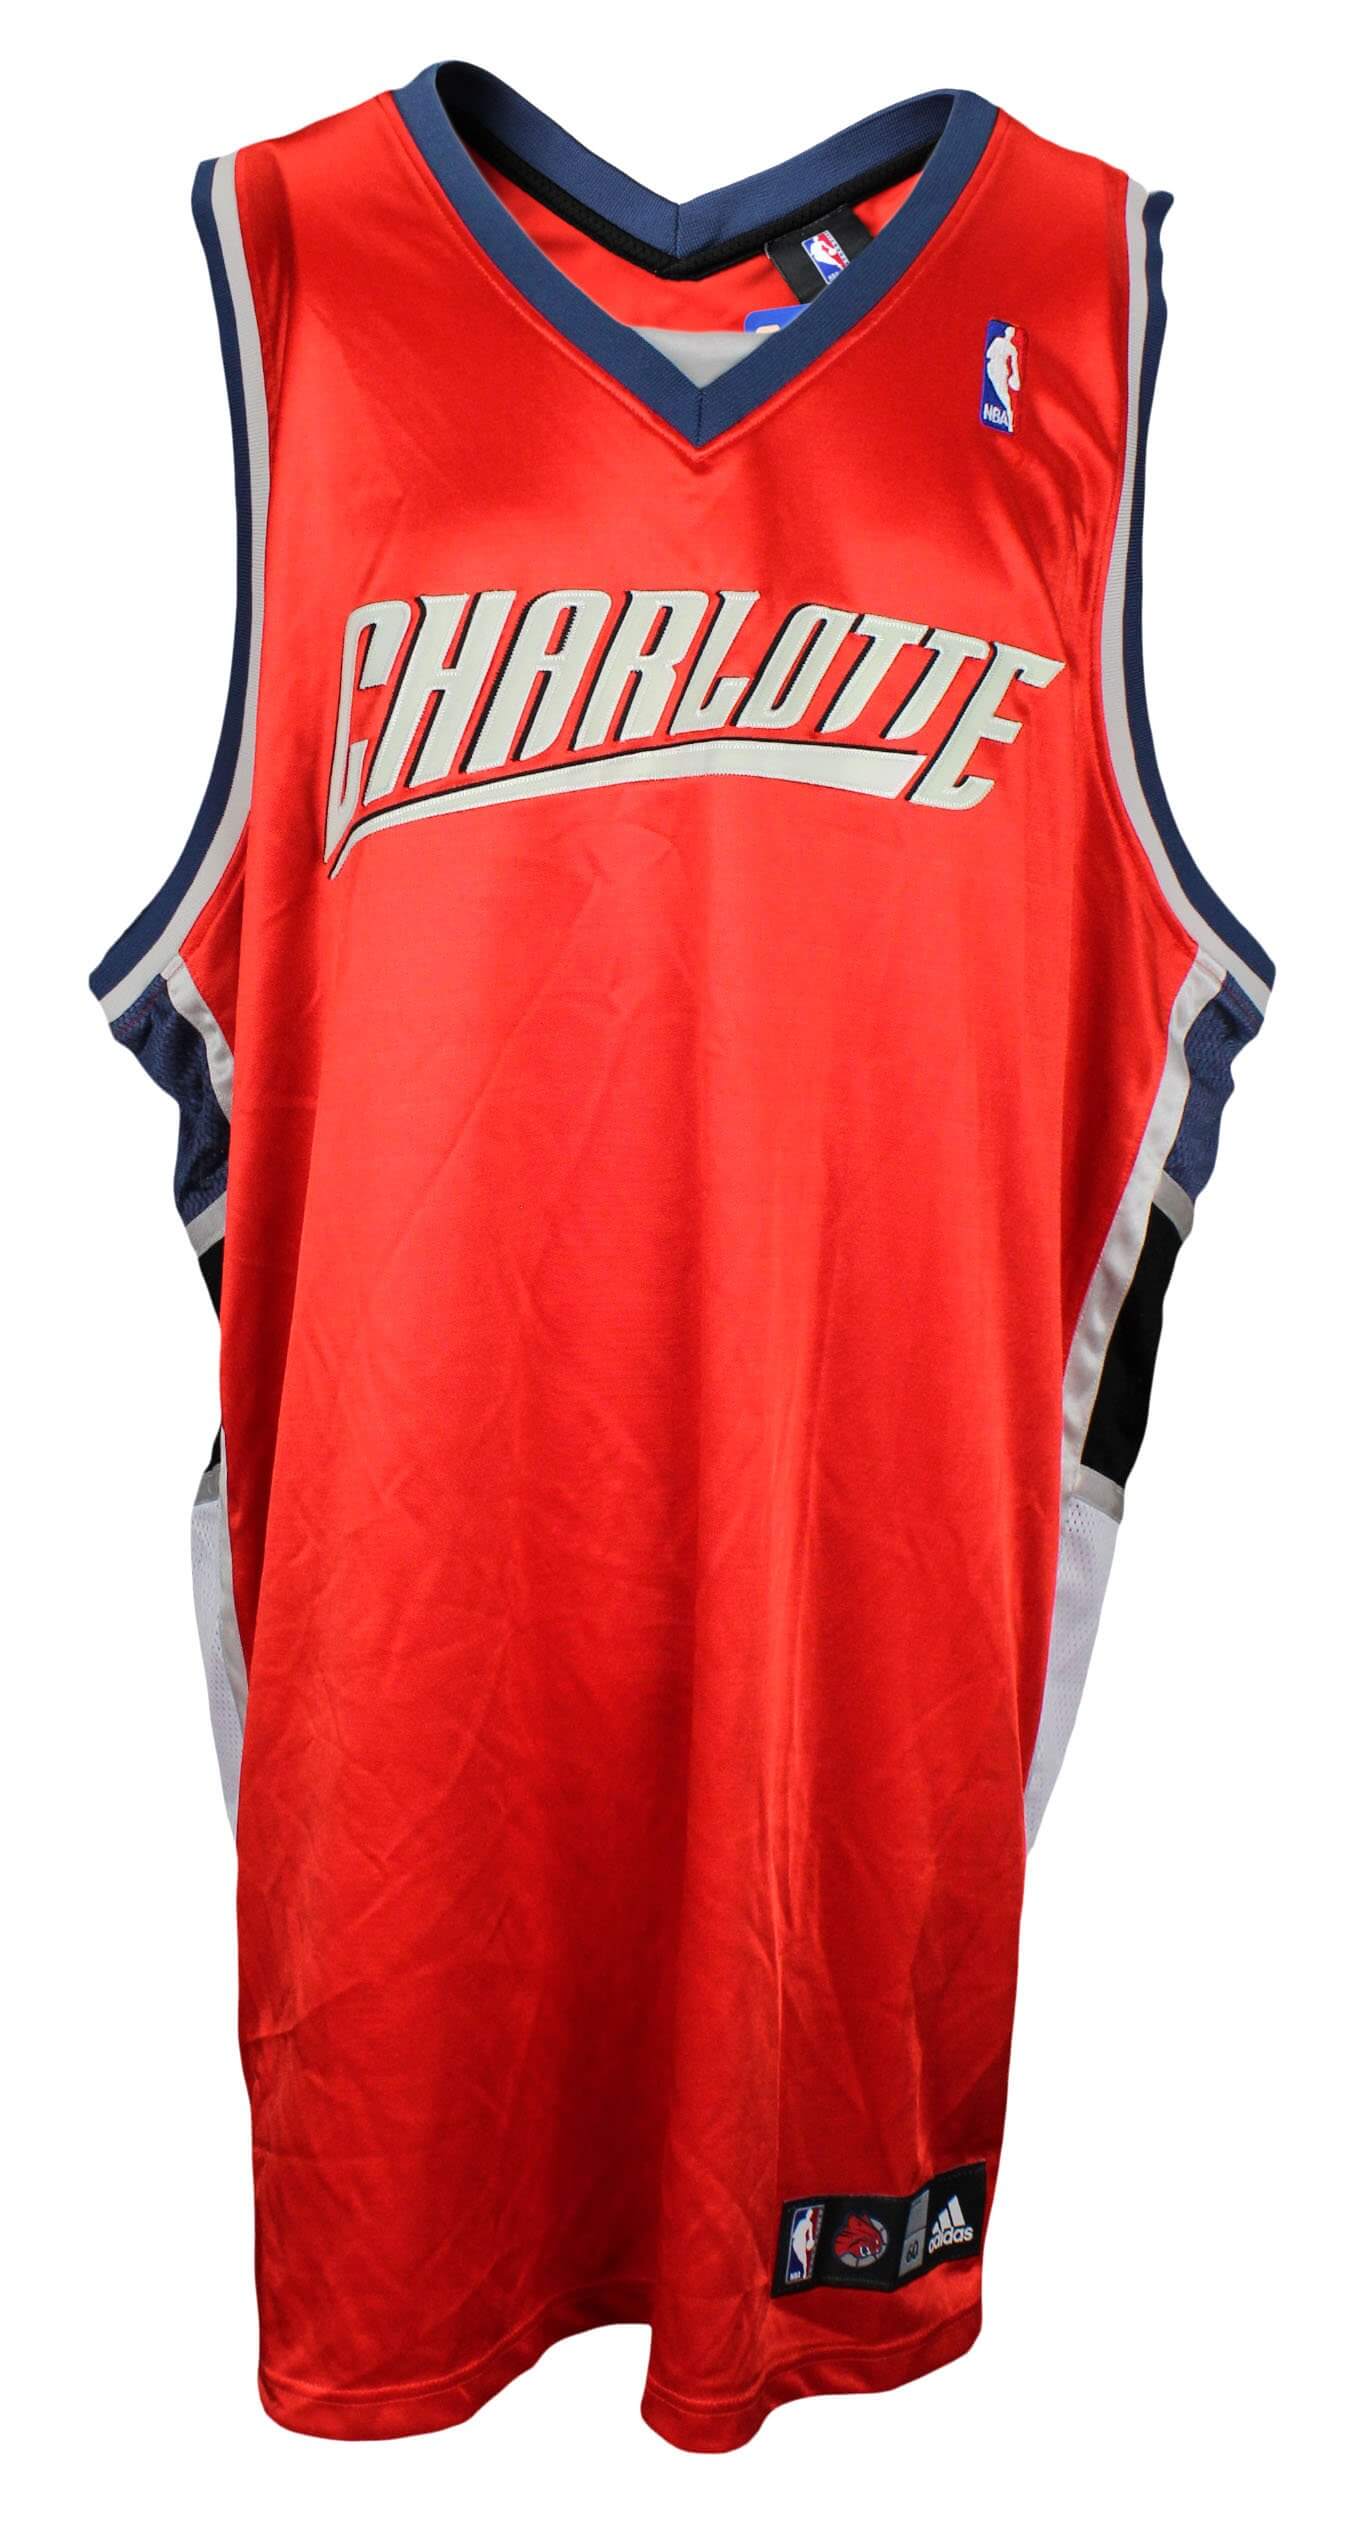 NBA Jersey Database, Charlotte Bobcats 2012-2014 Record: 64-100 (39%)